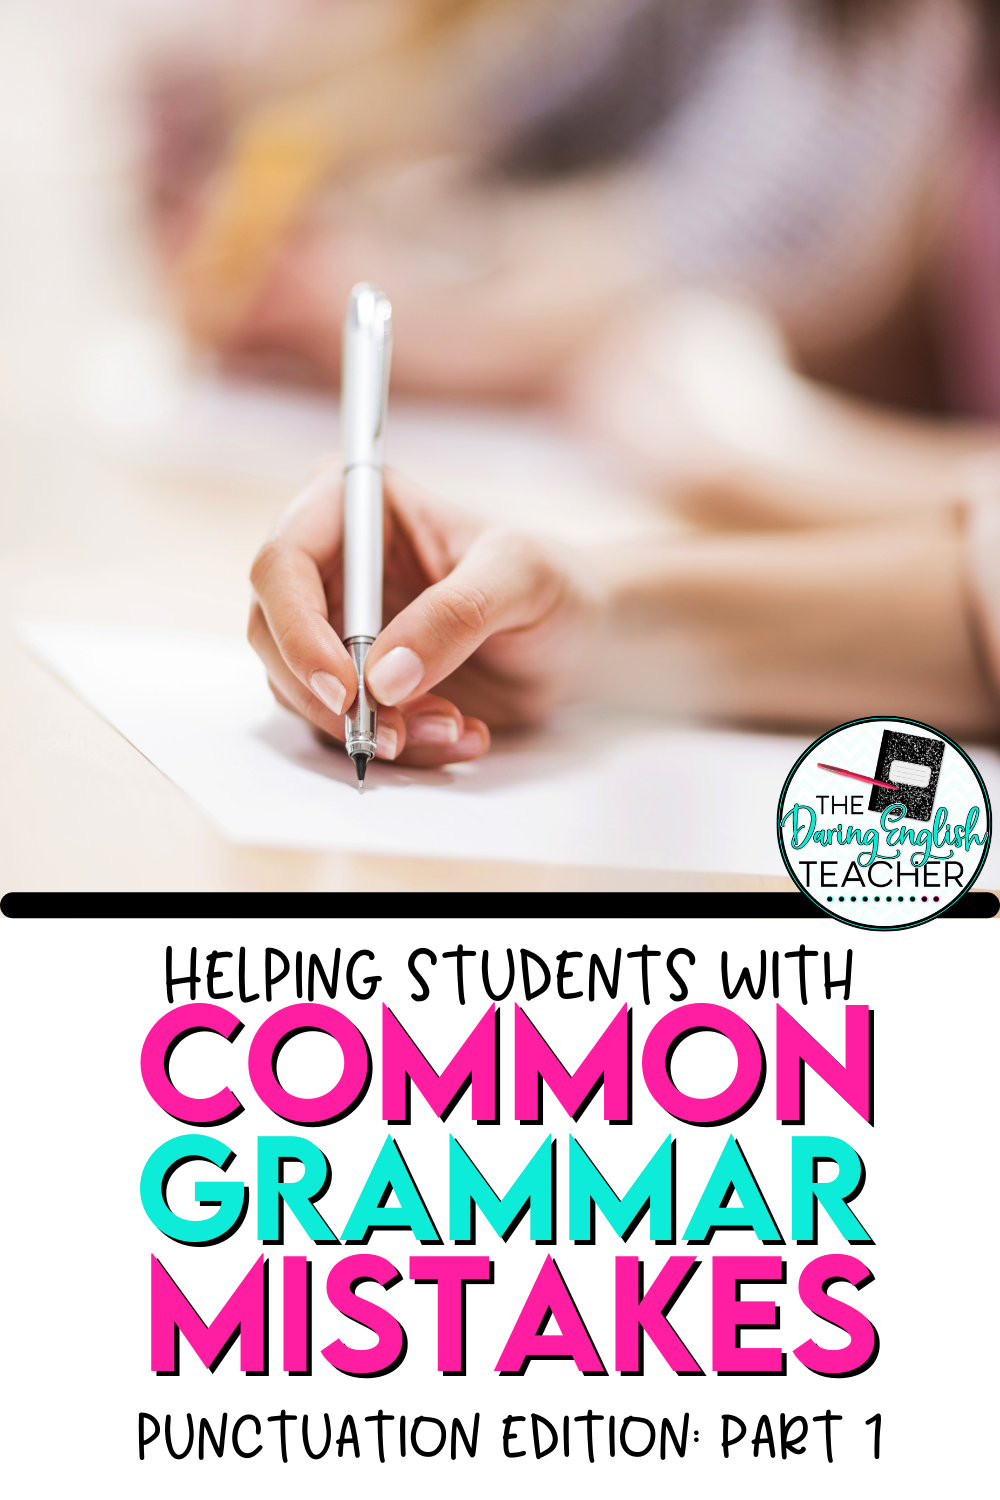 Common Grammar Mistakes: Punctuation Edition Part 1